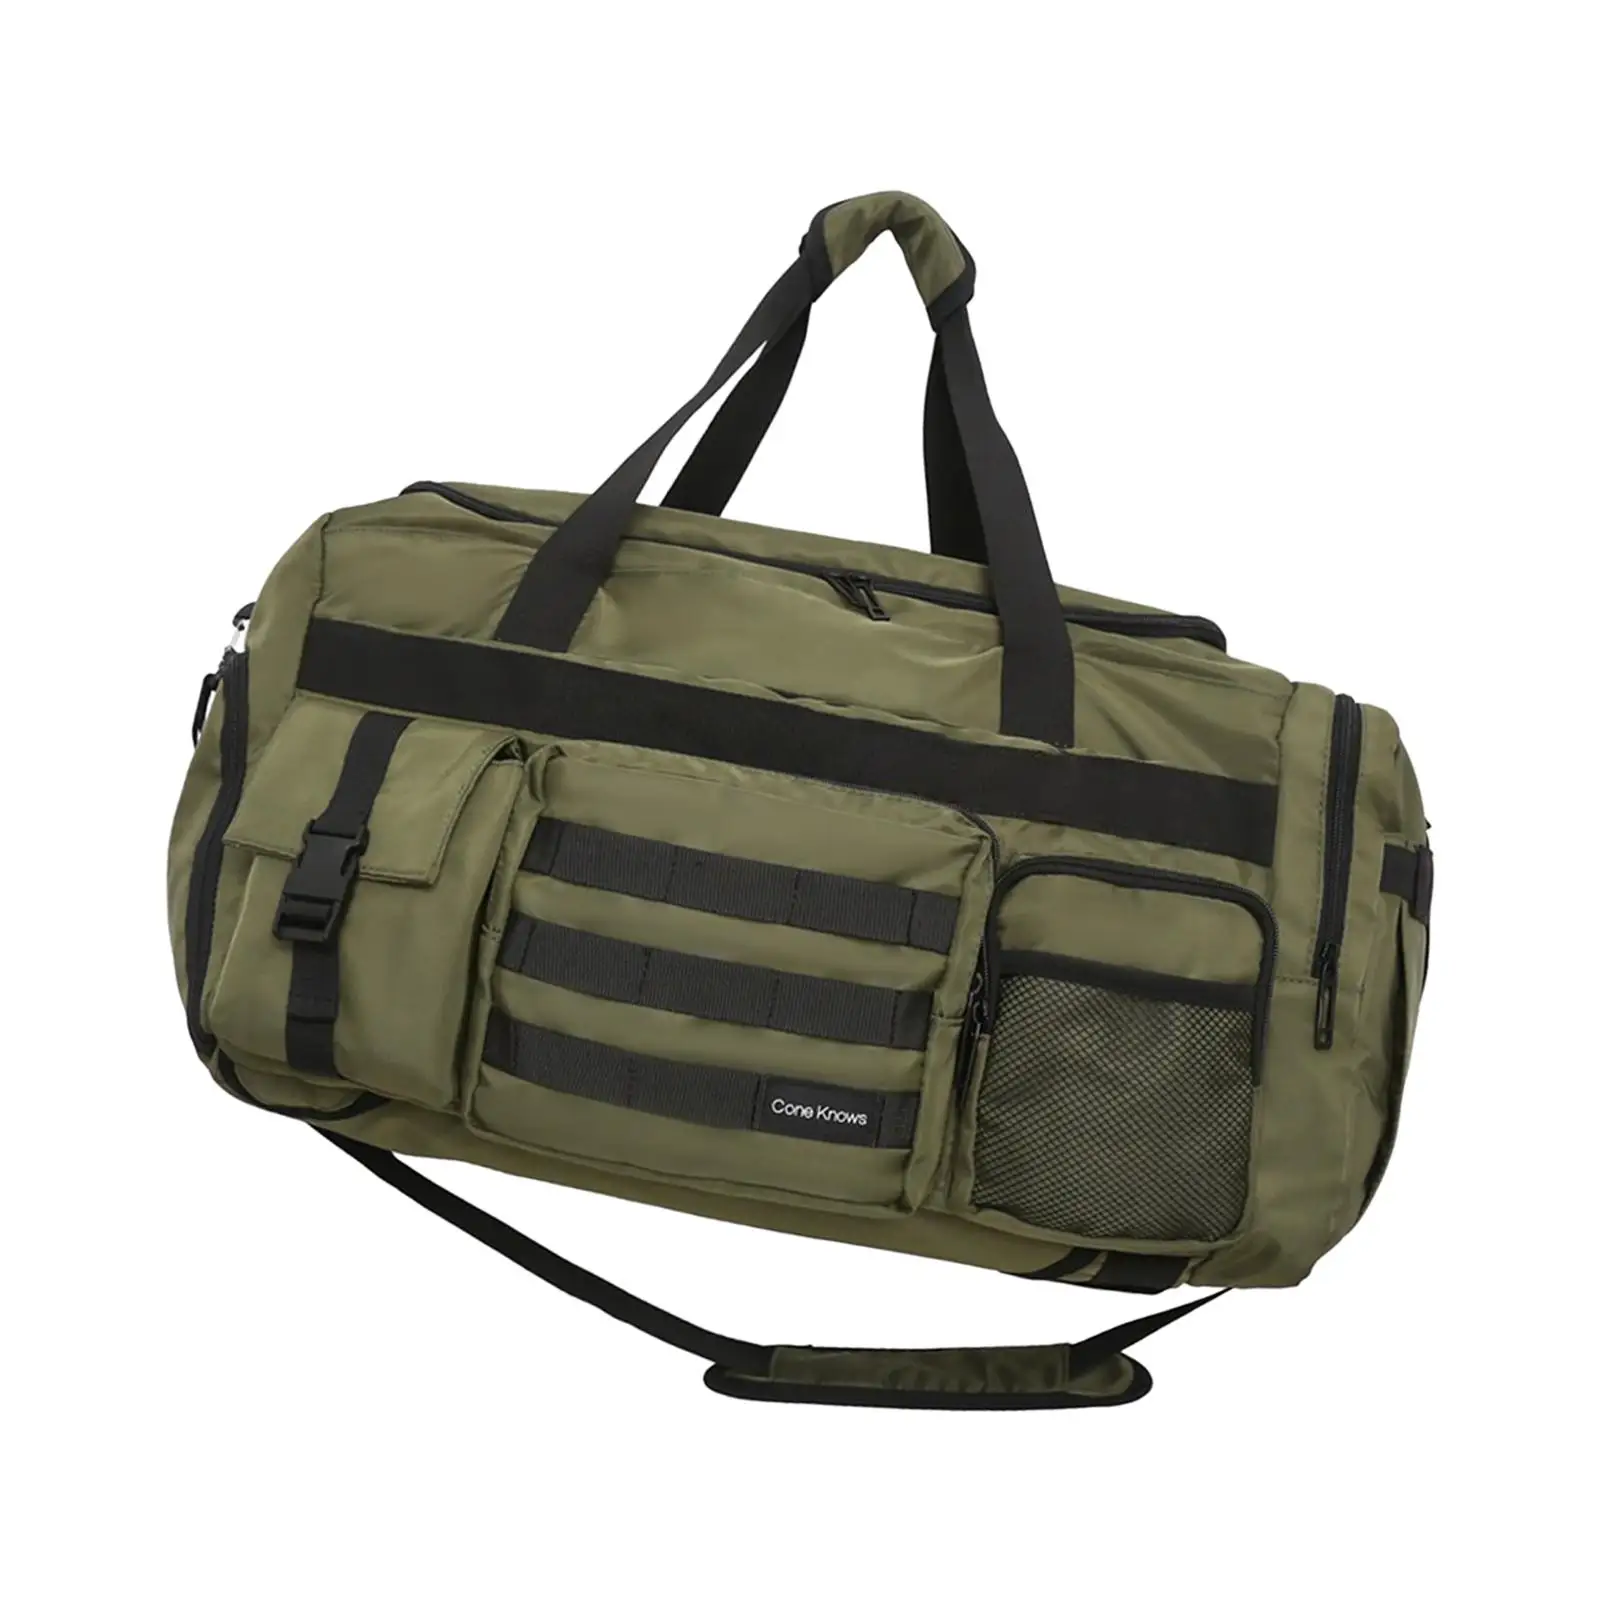 Duffle Backpack Sports Gym Bag Tote Bag Apparel Yoga Bag Multipurpose Shoulder Bag for Exercise Fitness Weekend Camping Outddor